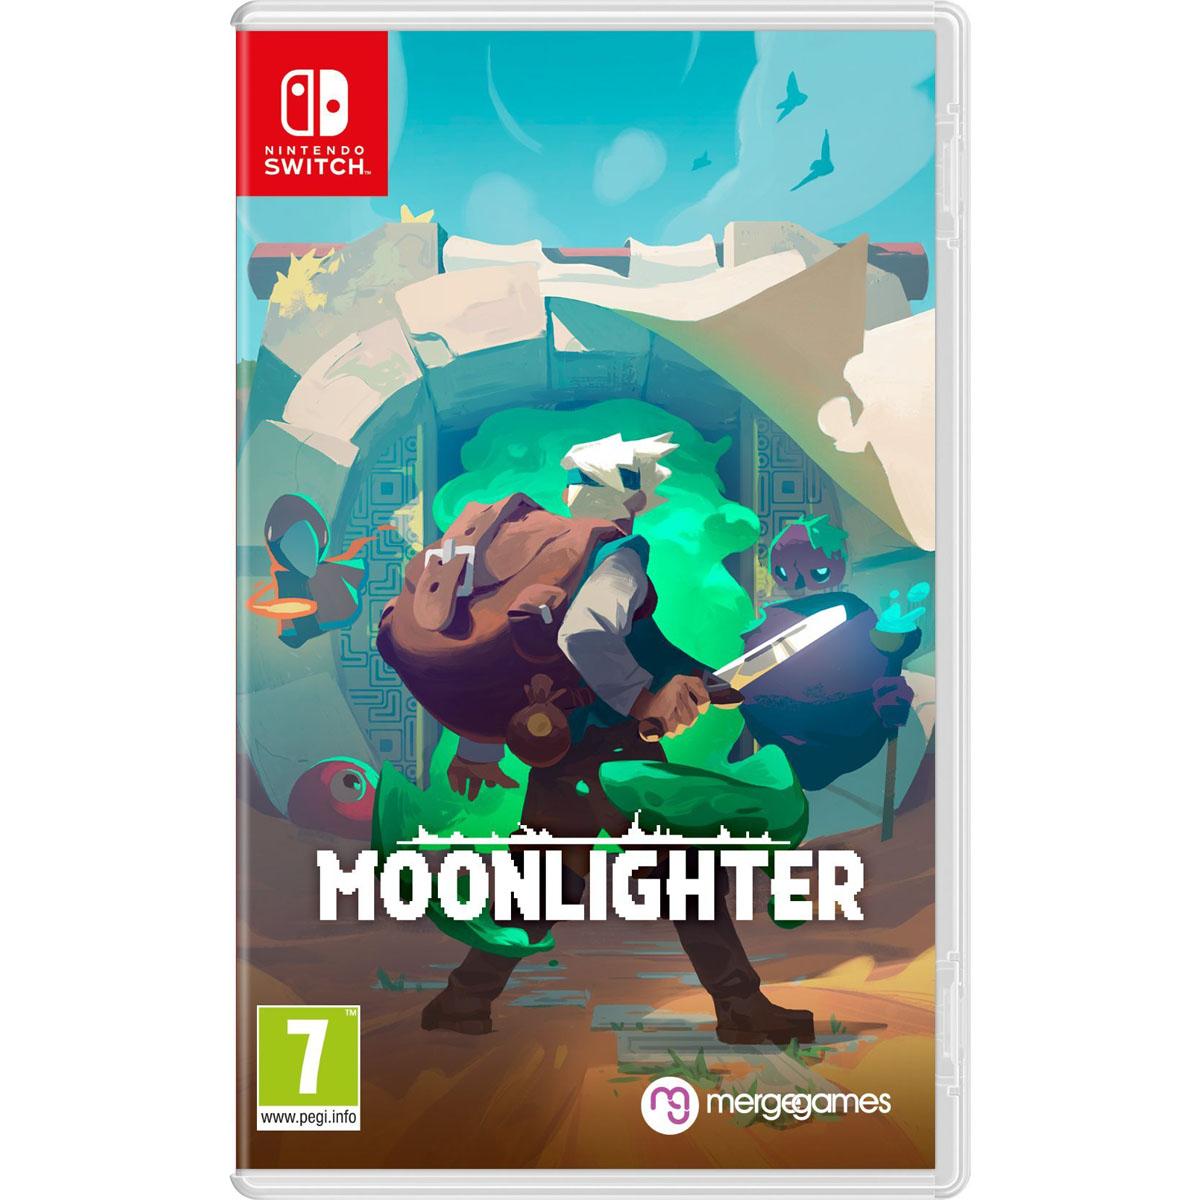 Moonlighter Nintendo Switch for $2.49